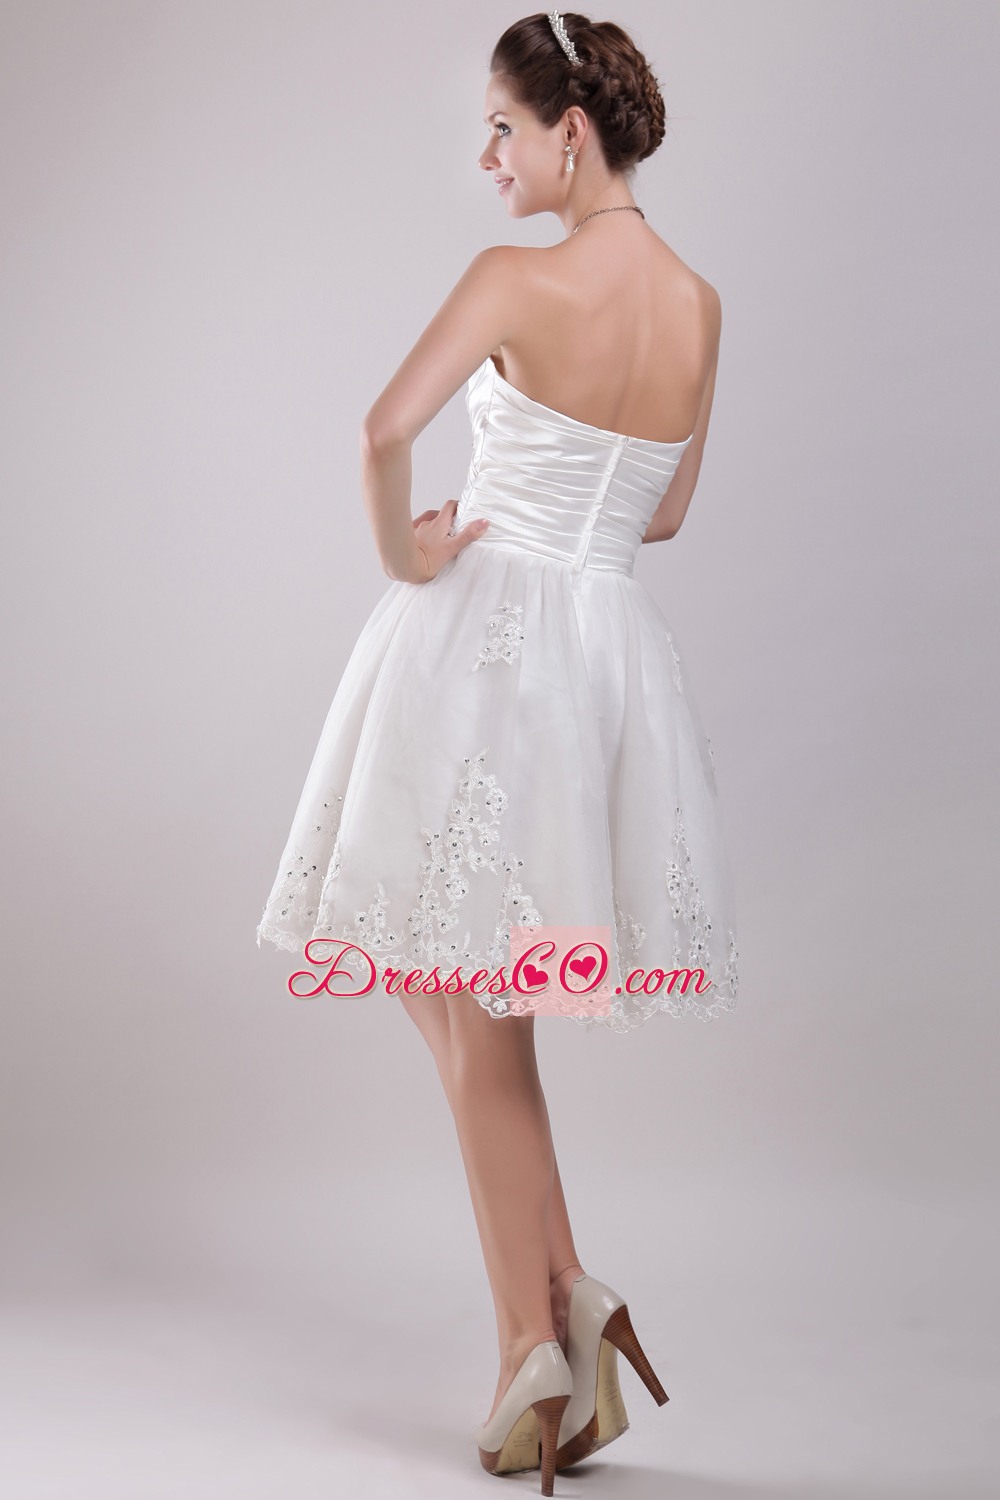 Sweet A-line/princess Knee-length Organza Appliques Wedding Dress